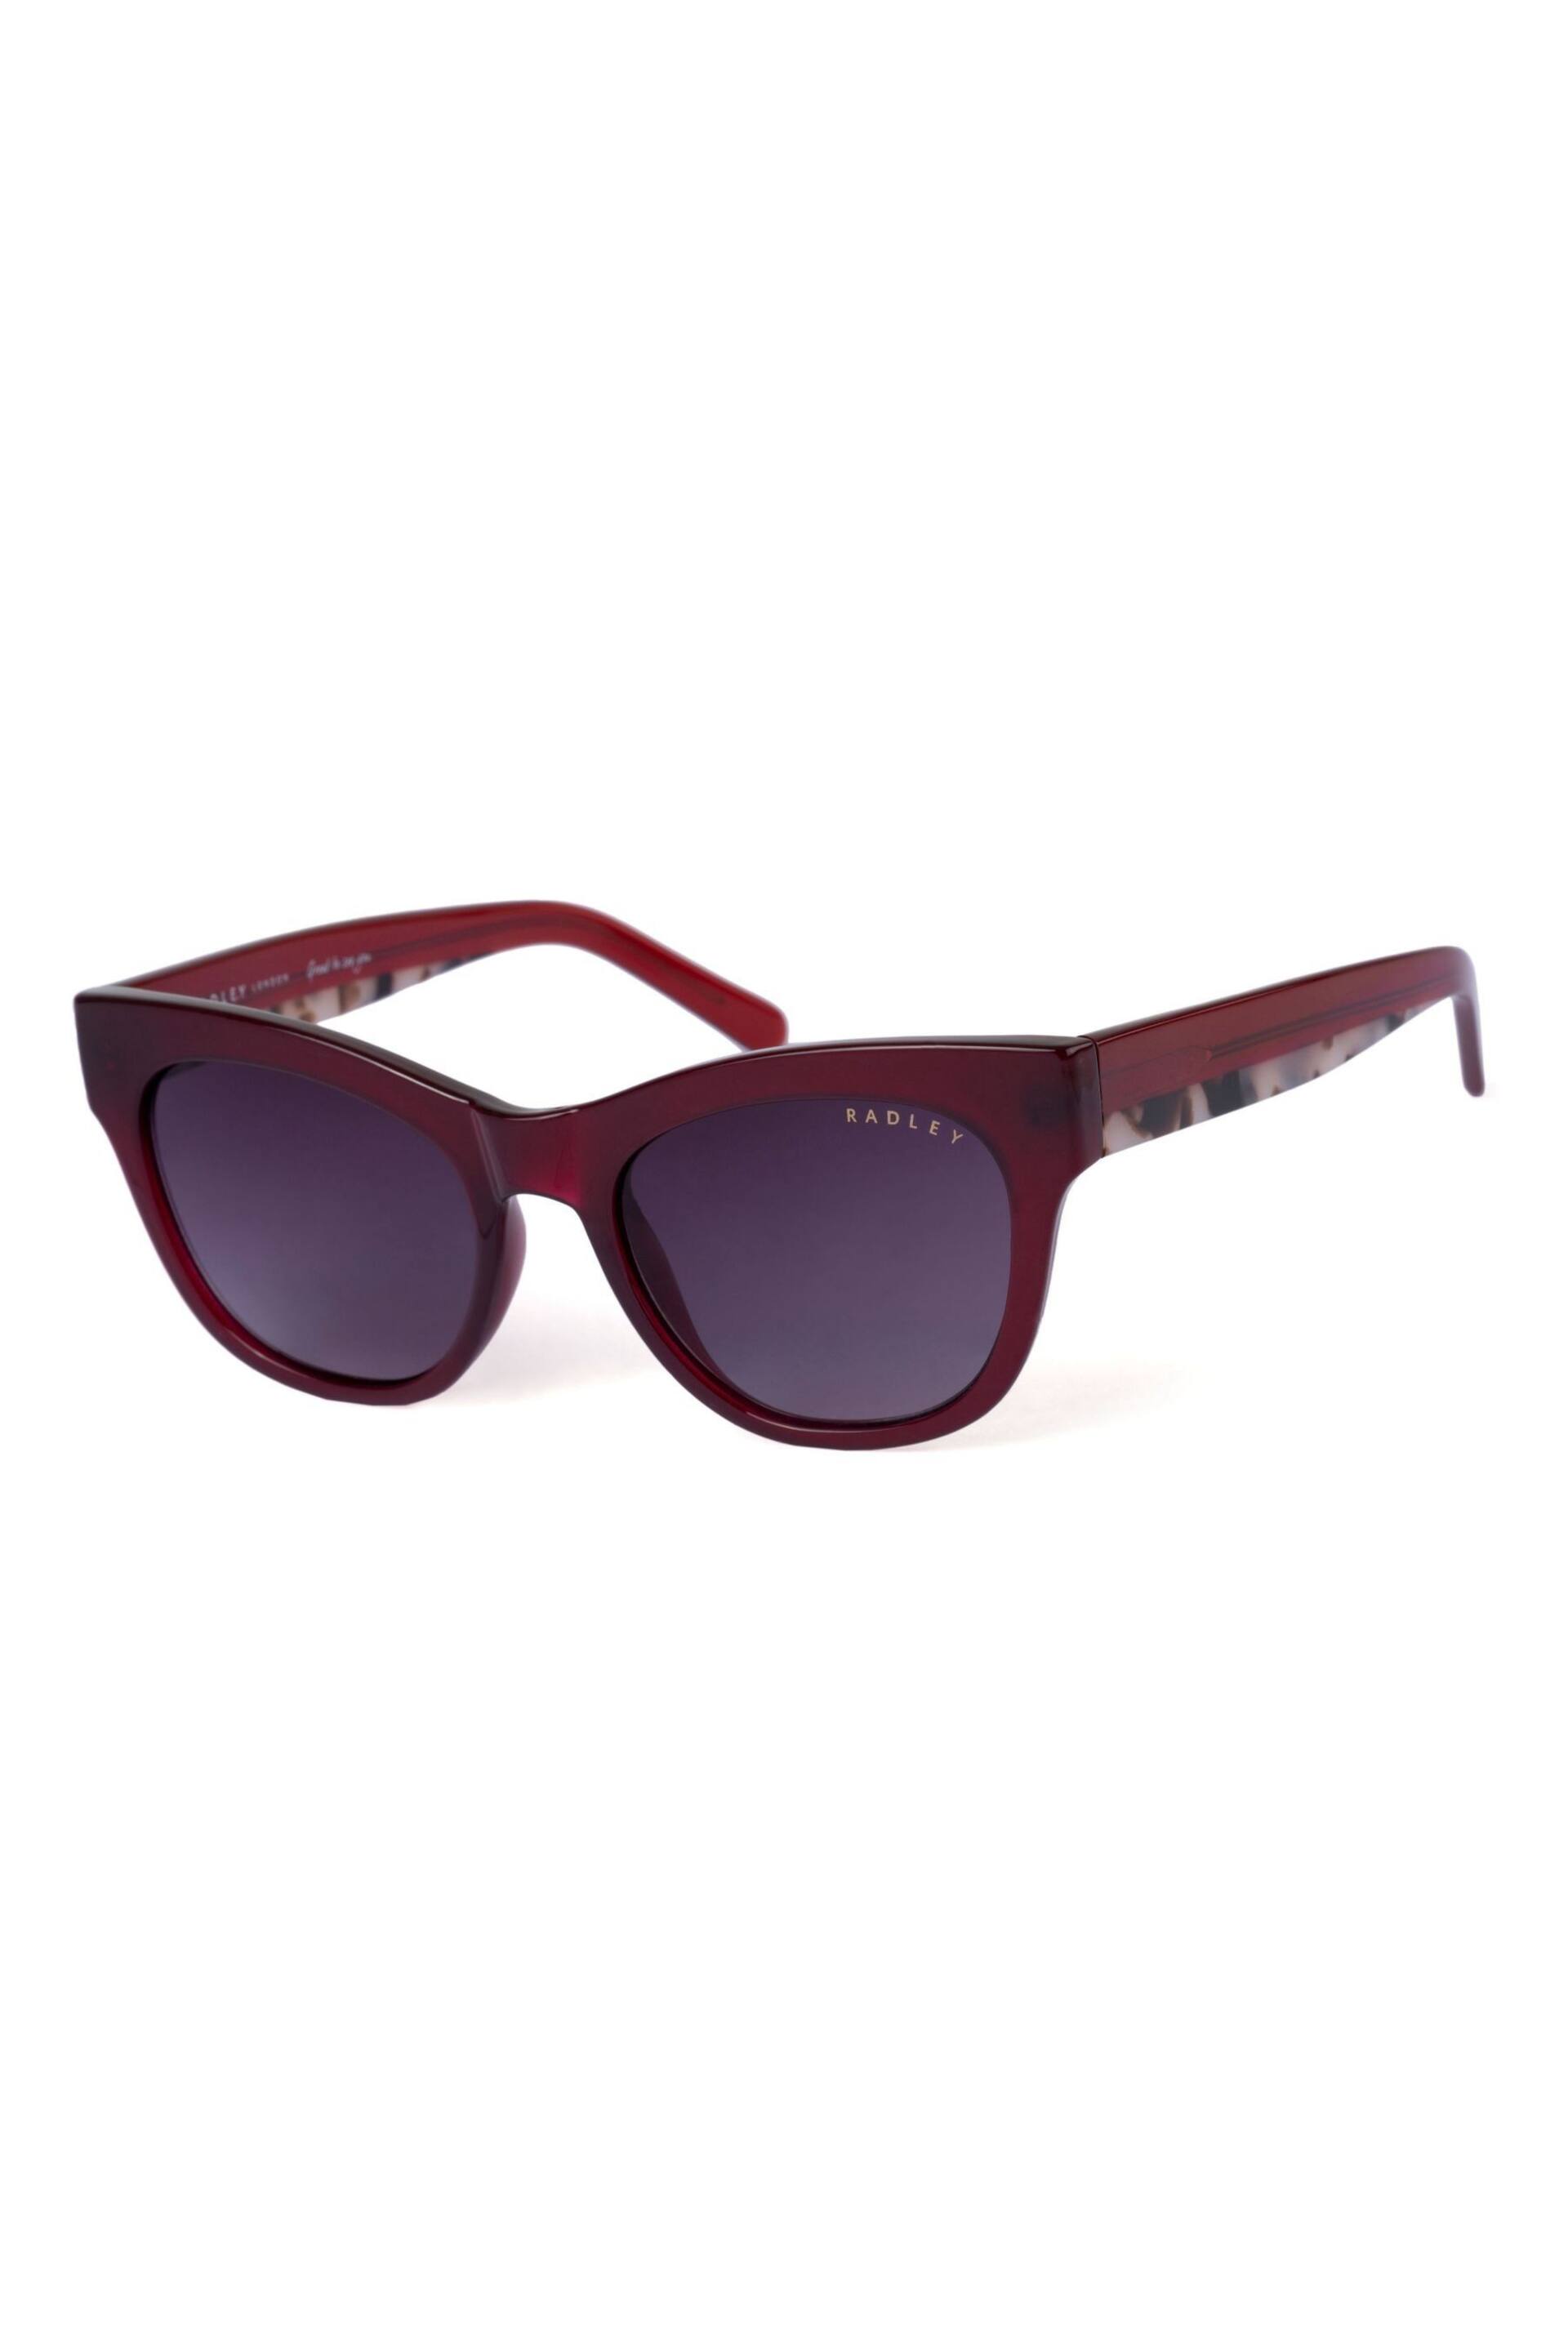 Radley Acetate 6508 Brown Sunglasses - Image 2 of 2